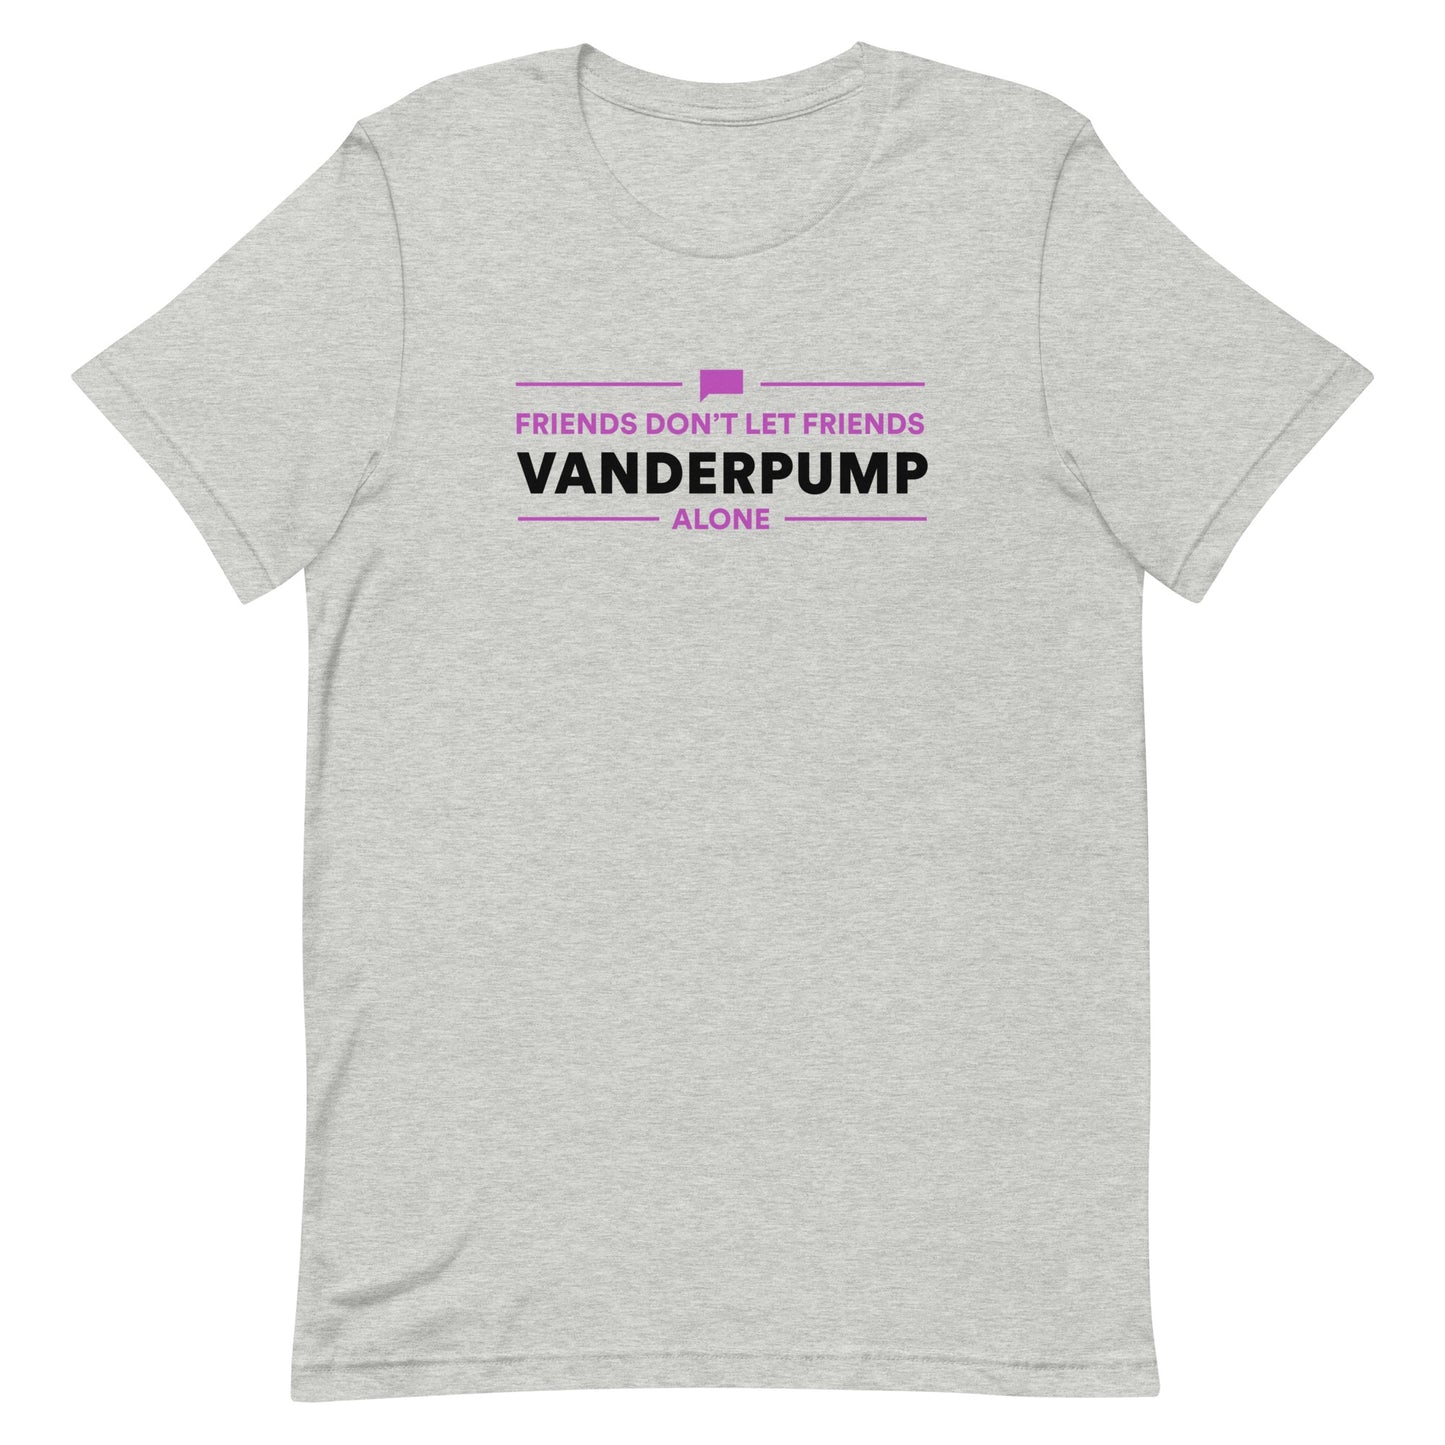 Vanderpump Rules Friends Don't Let Friends Vanderpump Alone Adult T Shirt